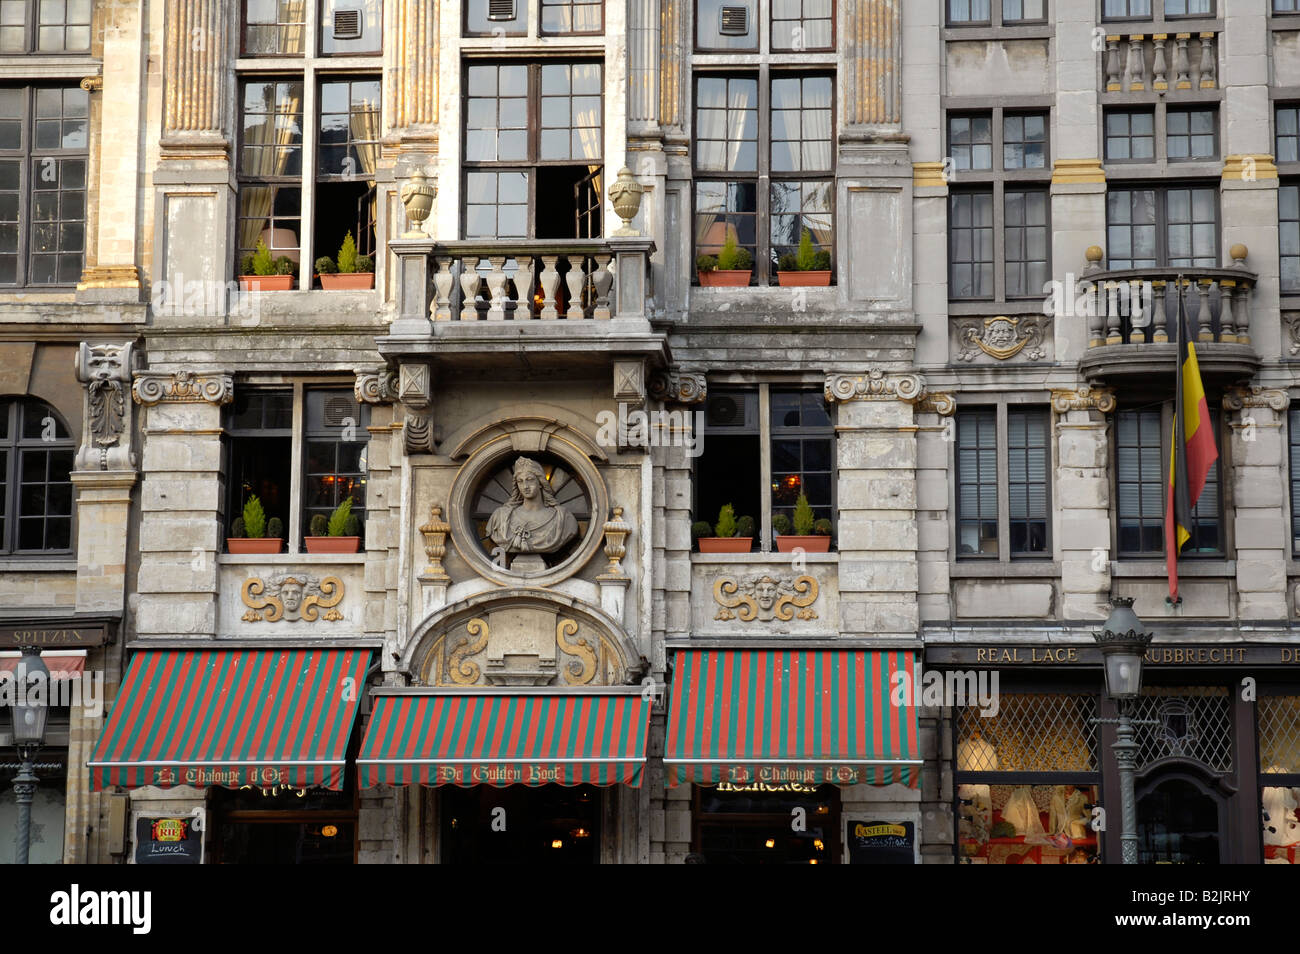 The famous Grand Place De Gulden Boot restaurant at Brussels Belgium ...